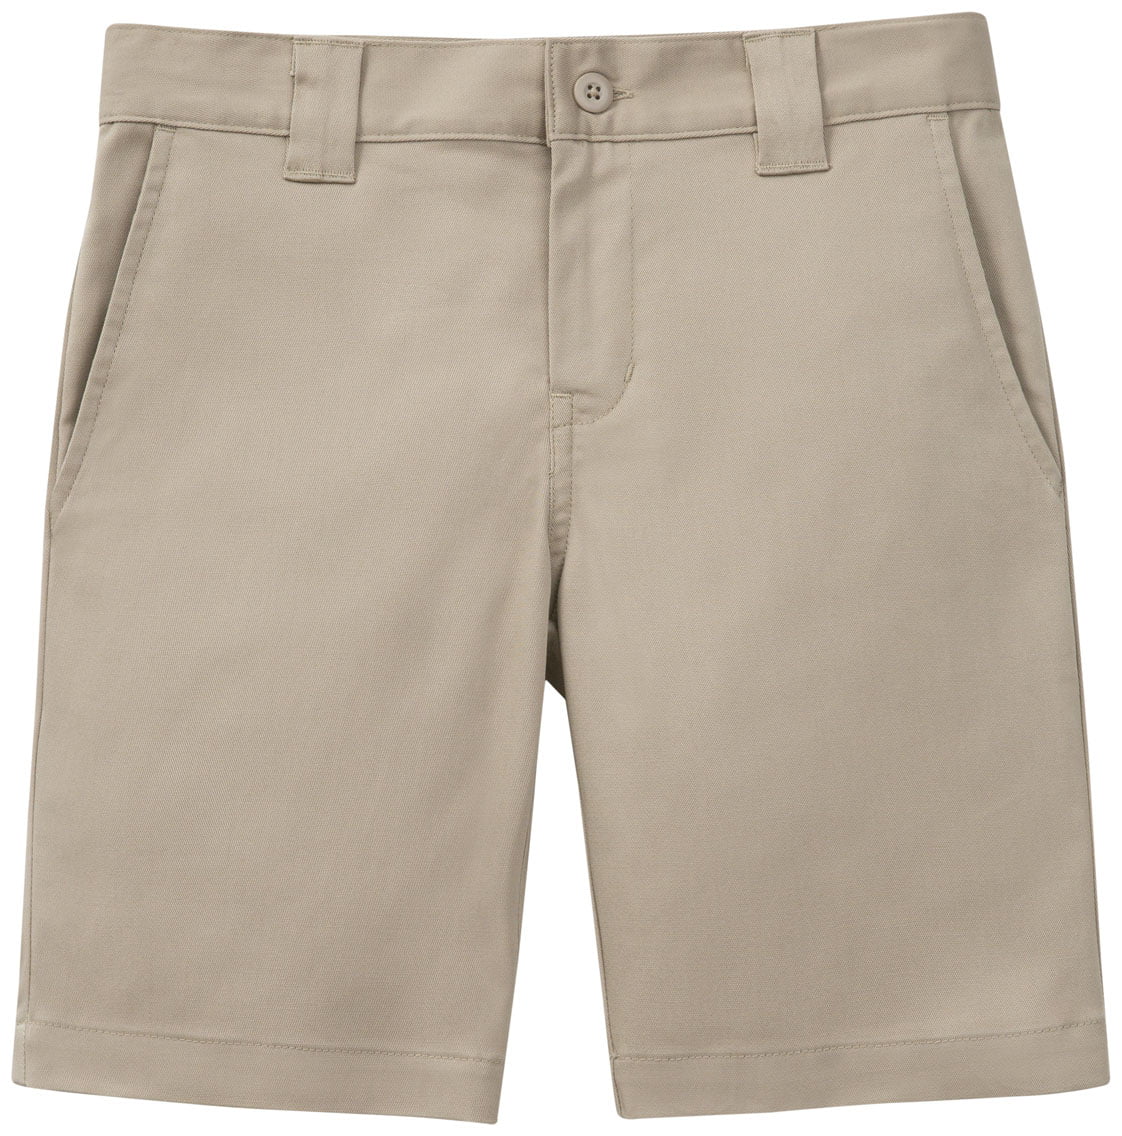 NEW Dickies Boys Khaki Shorts School Uniform Size 8 H Flat Front Classic Fit 